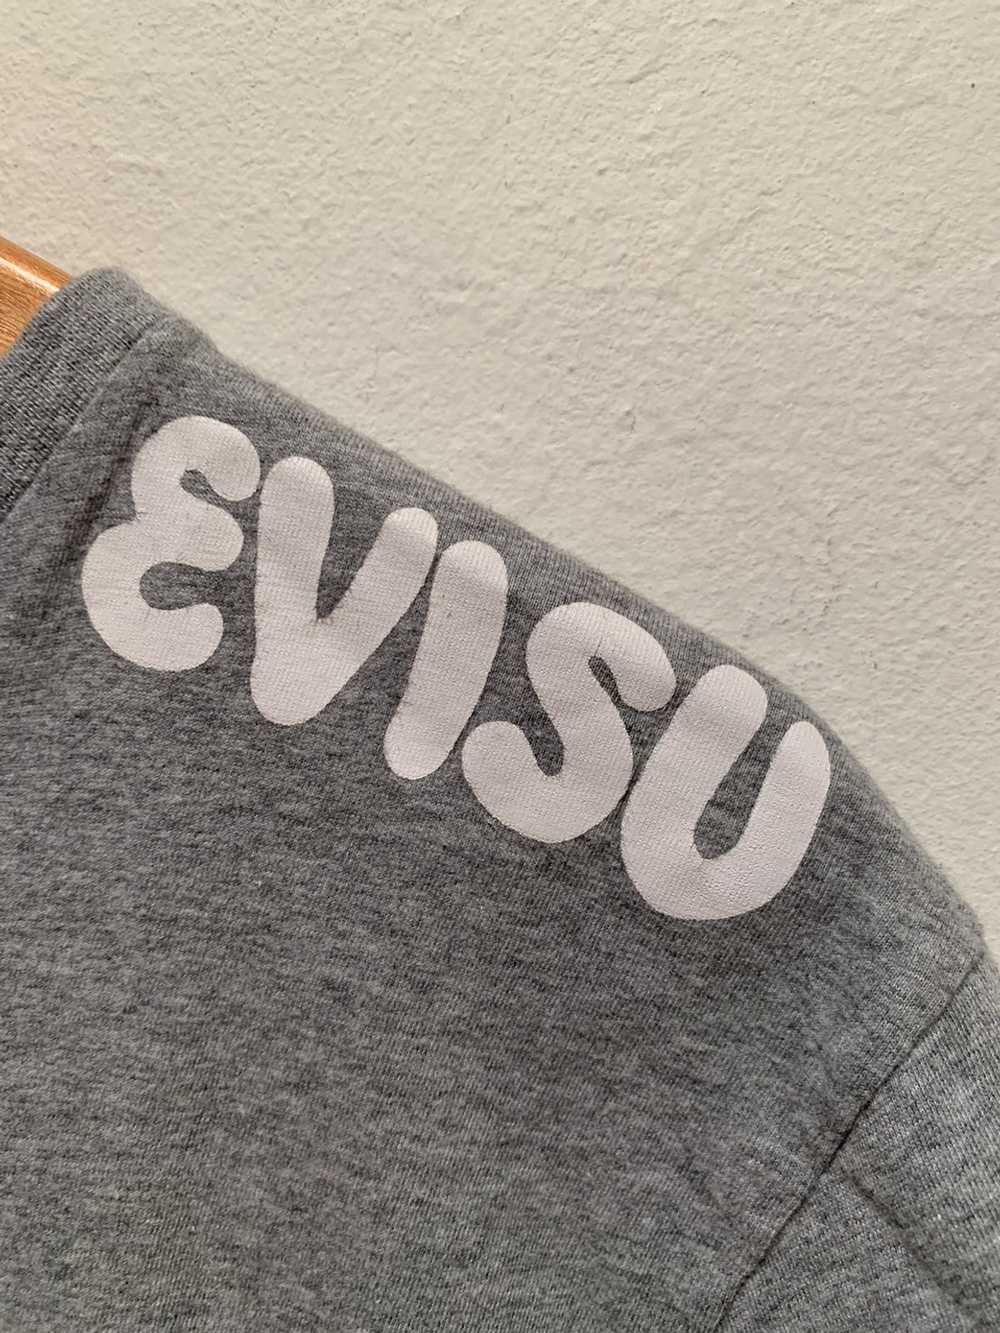 Designer × Evisu × Rare *RARE* Evisu Chain Stitch… - image 6